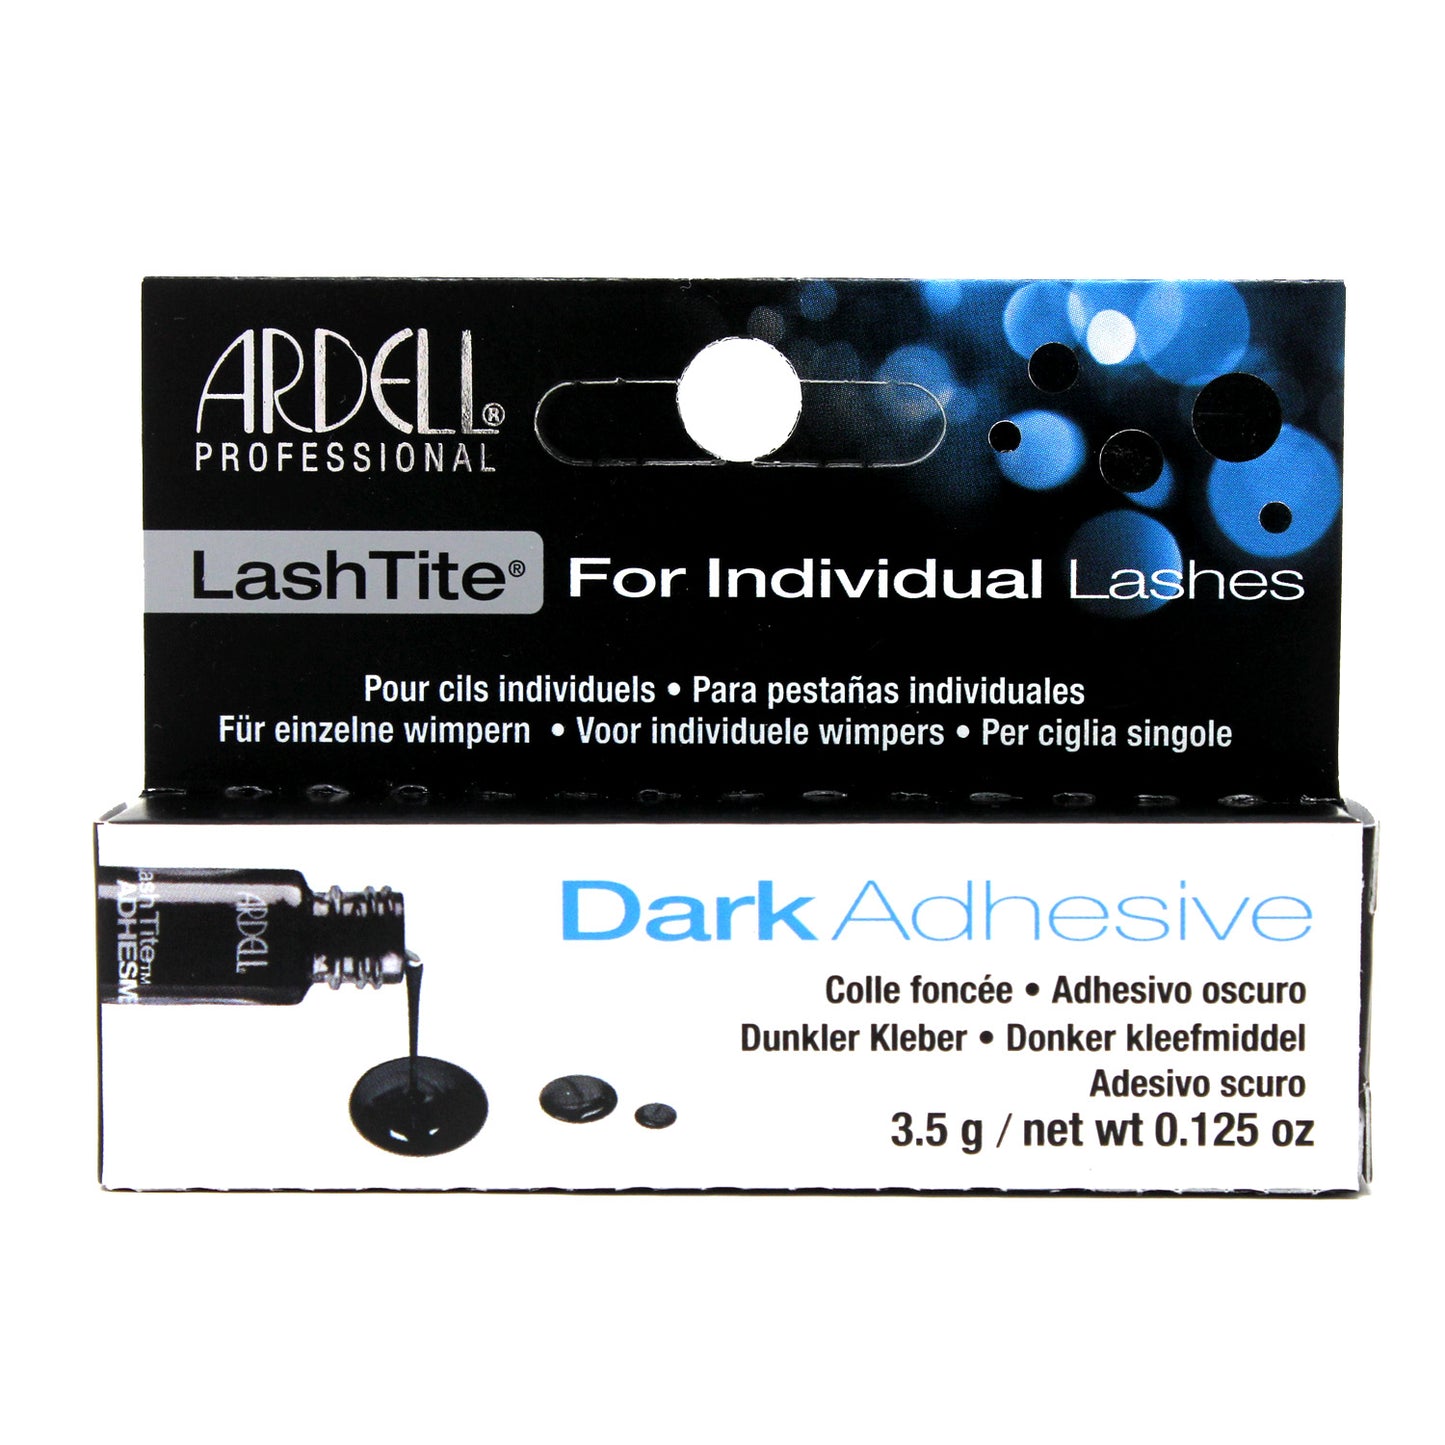 LashTite Lash Adhesive Dark for Individual Lashes, 0.125 oz